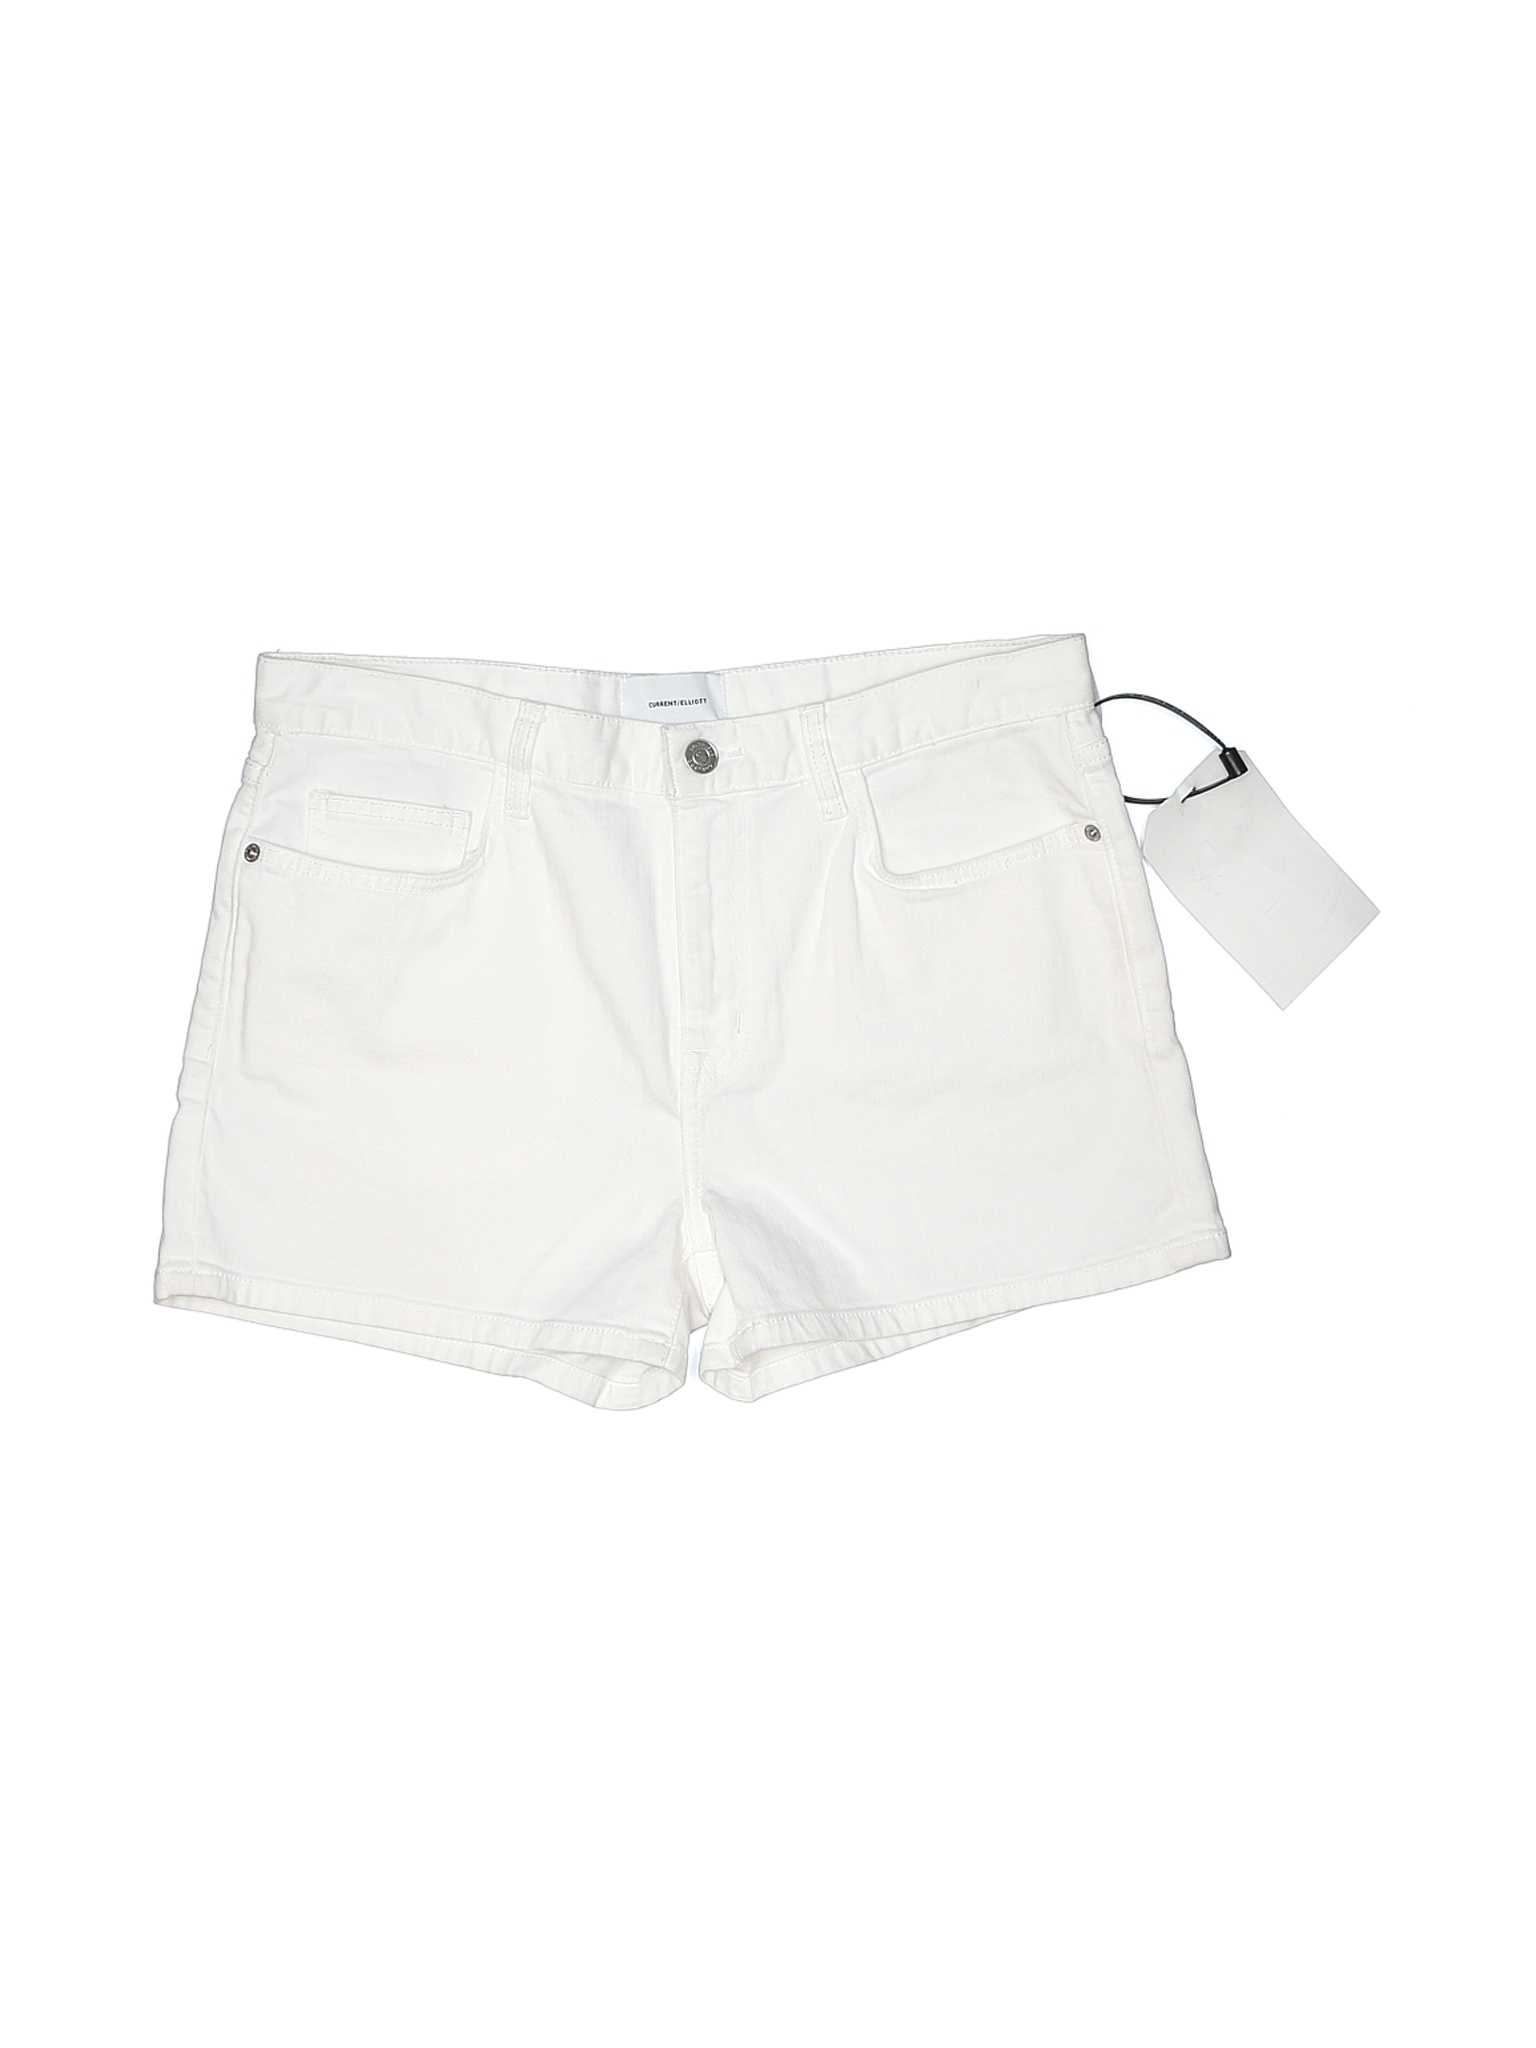 NWT Current/Elliott Women White Denim Shorts 30W | eBay